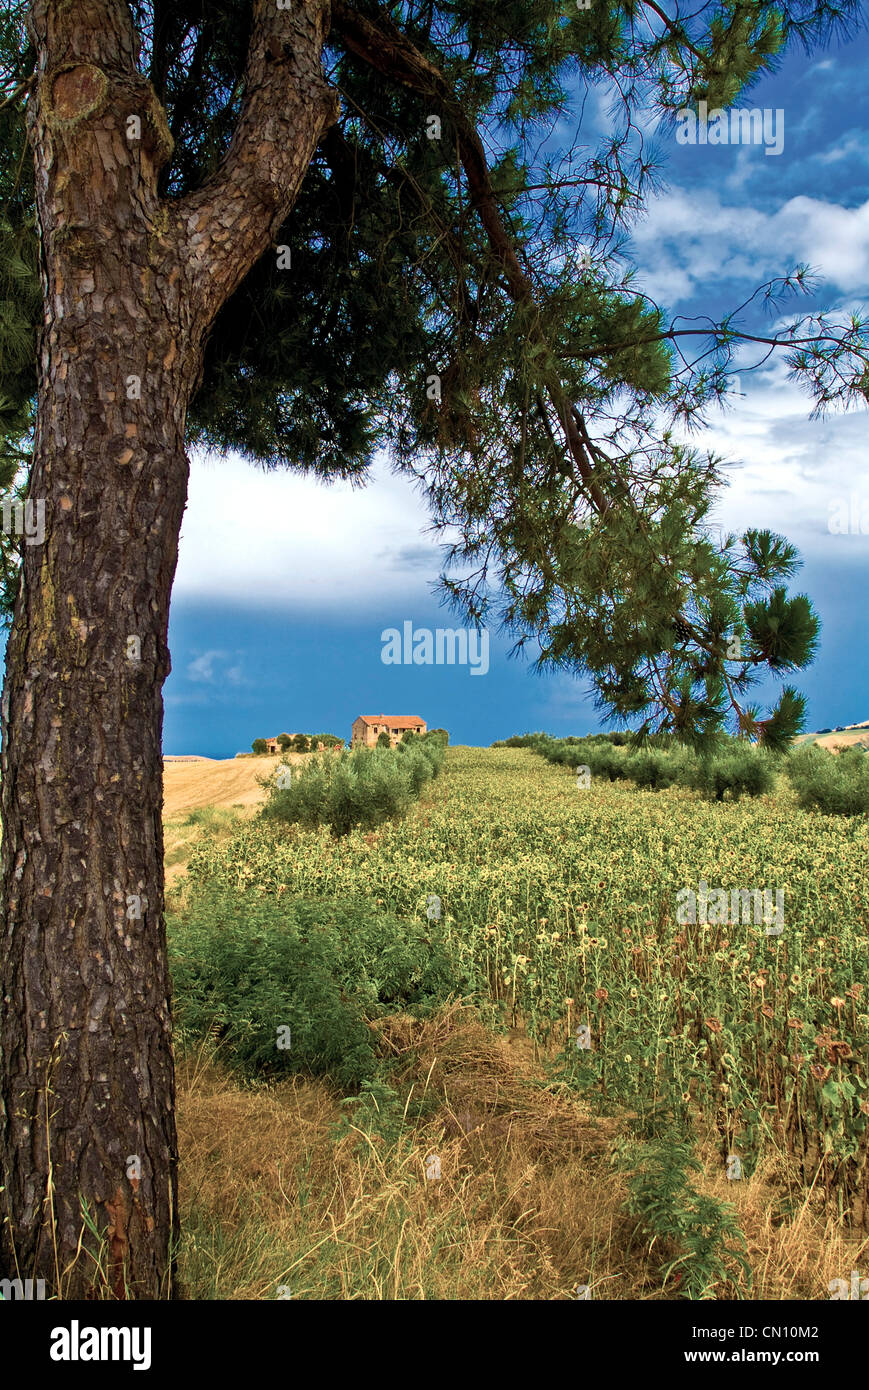 Italia Abruzos provincia de Teramo paisaje con girasoles y granja Foto de stock